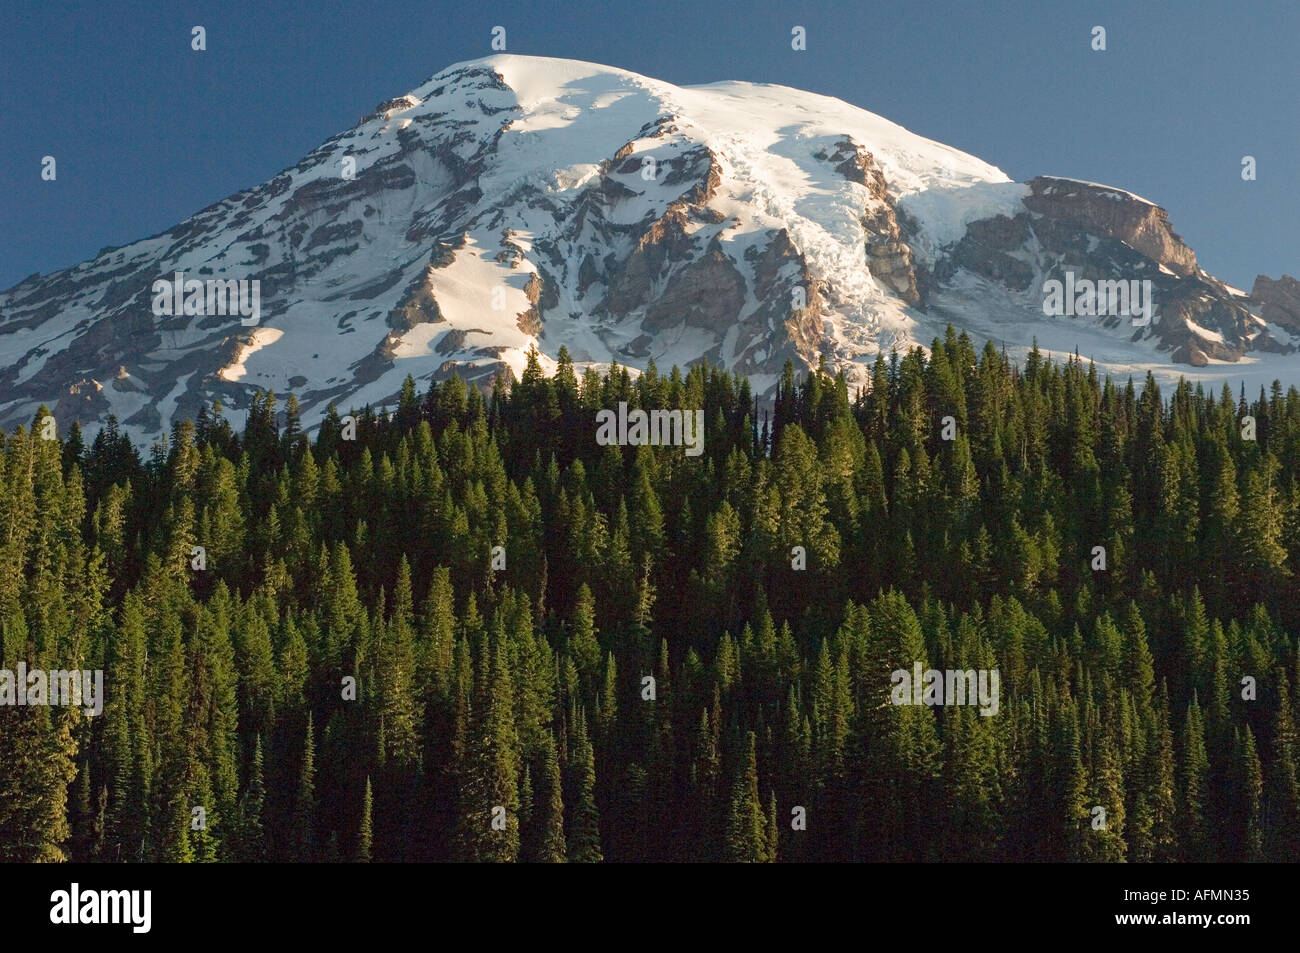 USA WASHINGTON, Cascade Range, Mount Rainier National Park, PARADISE area, Alpine forest below 14,410 foot summit Stock Photo